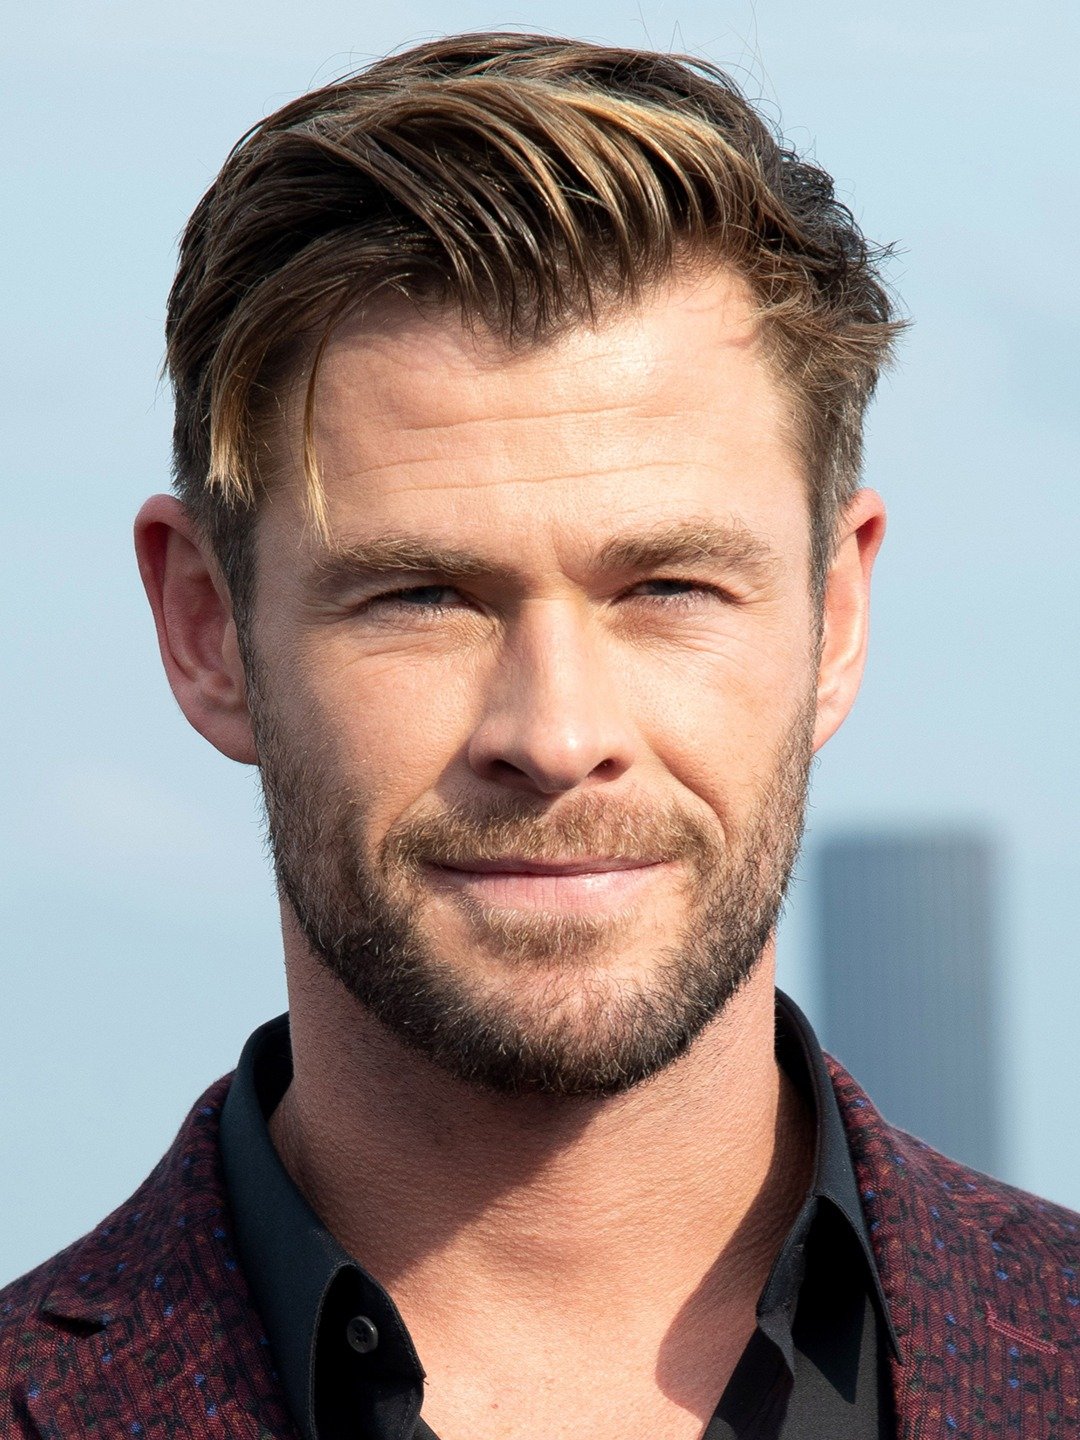 How tall is Chris Hemsworth?